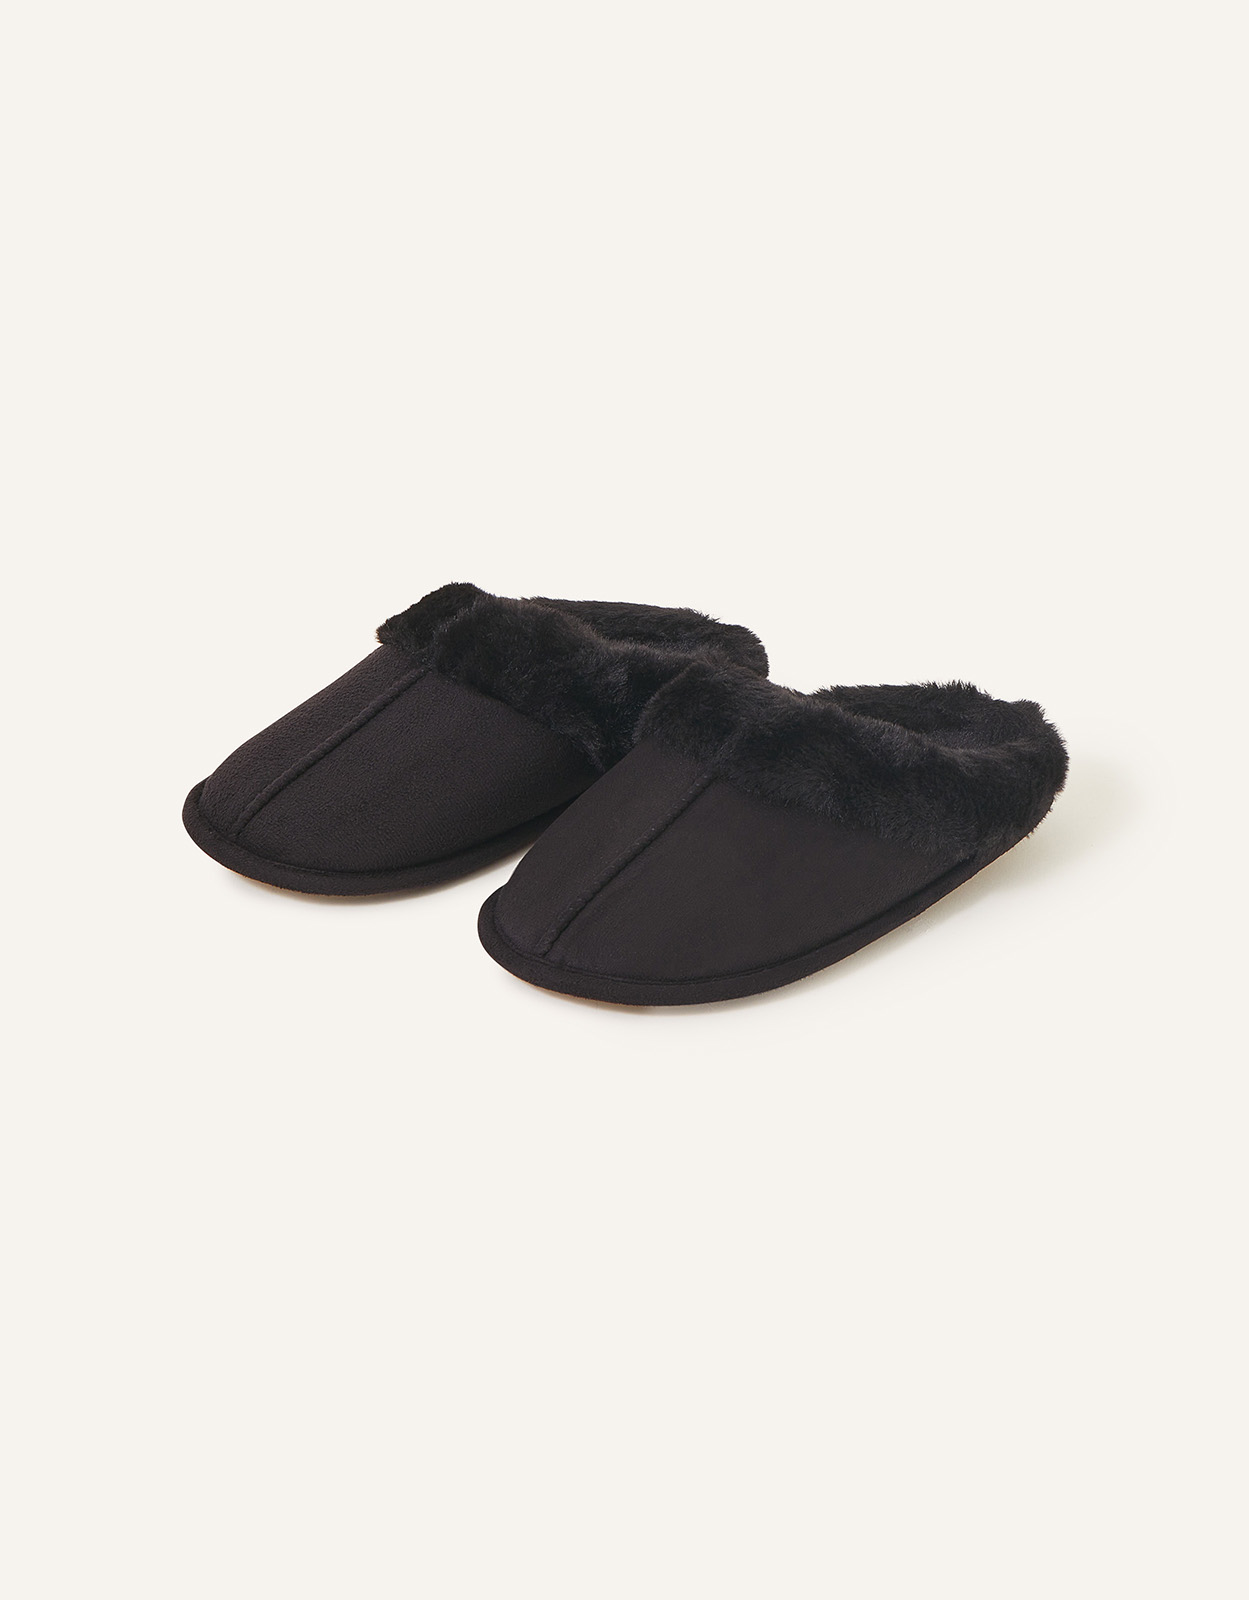 Accessorize Women's Faux Fur Mule Slippers Black, Size: L